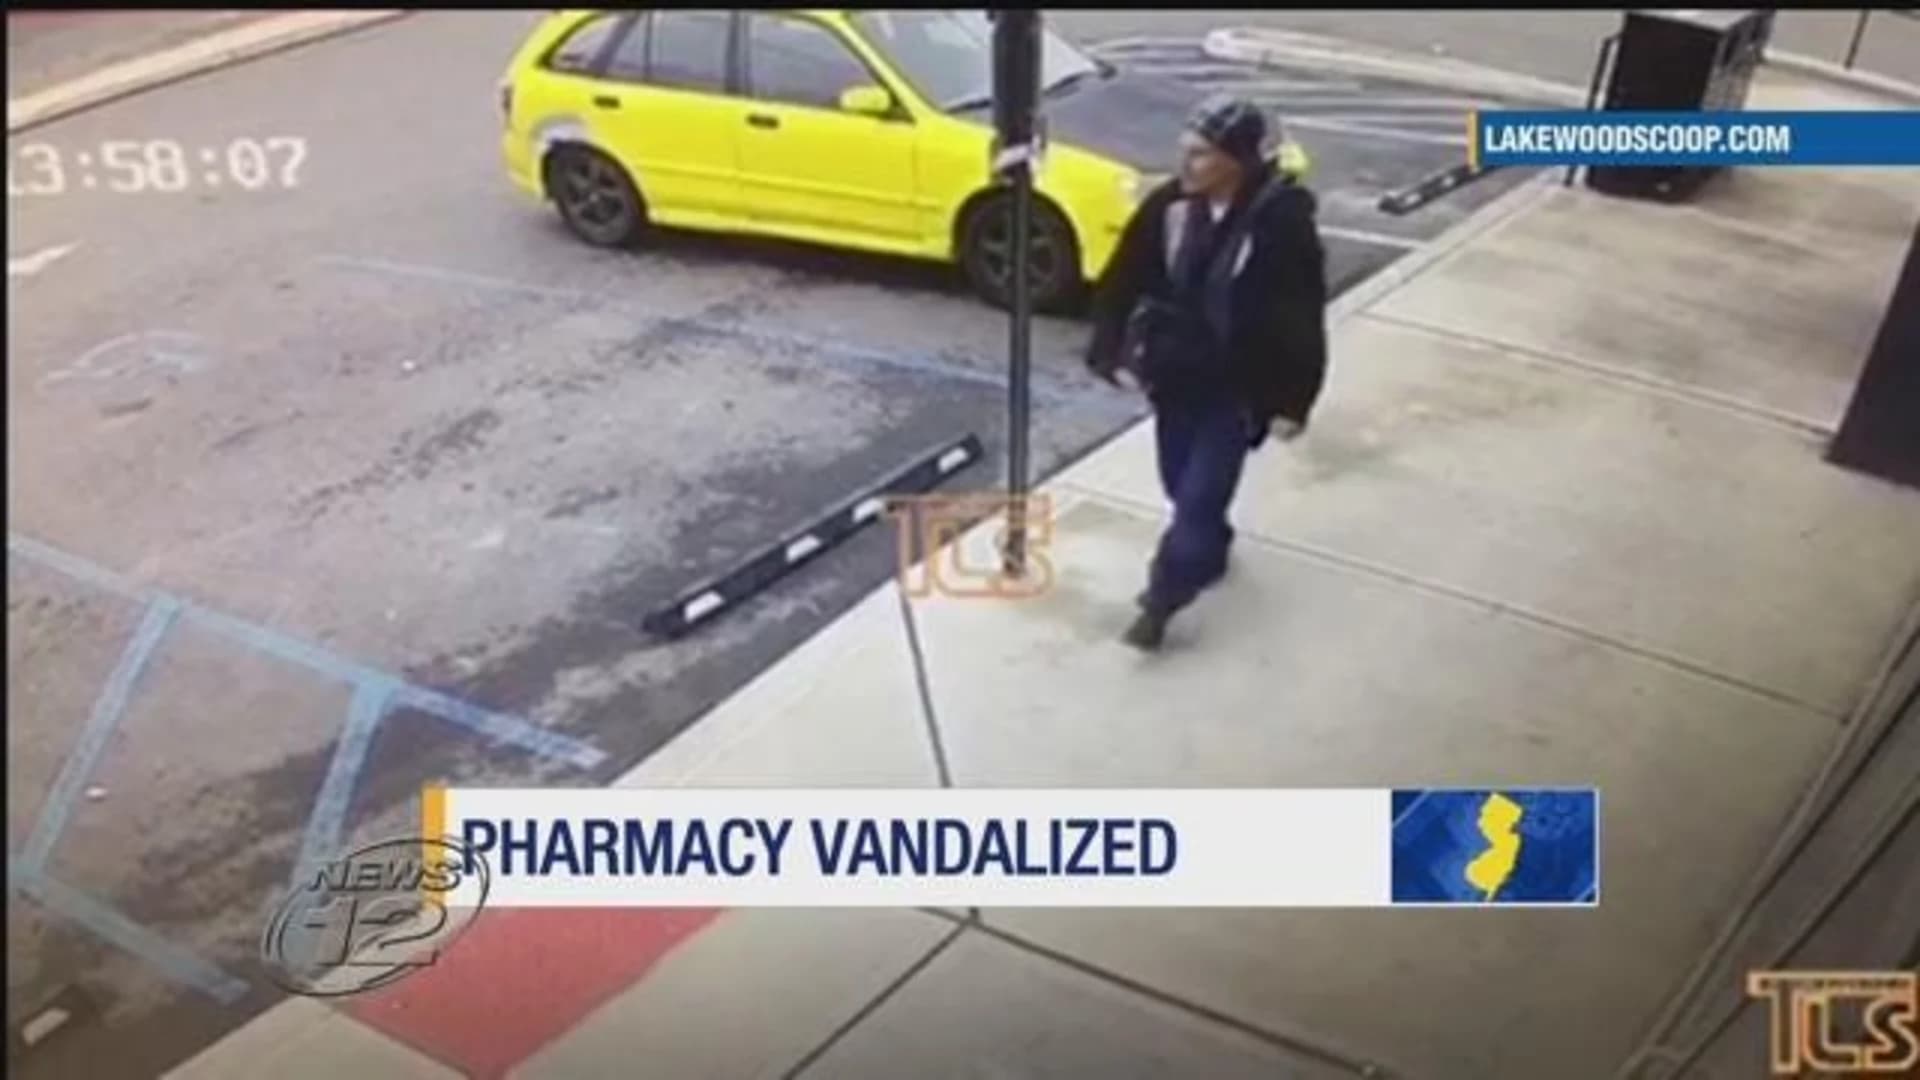 Police: Man throws brick through window at pharmacy in Lakewood